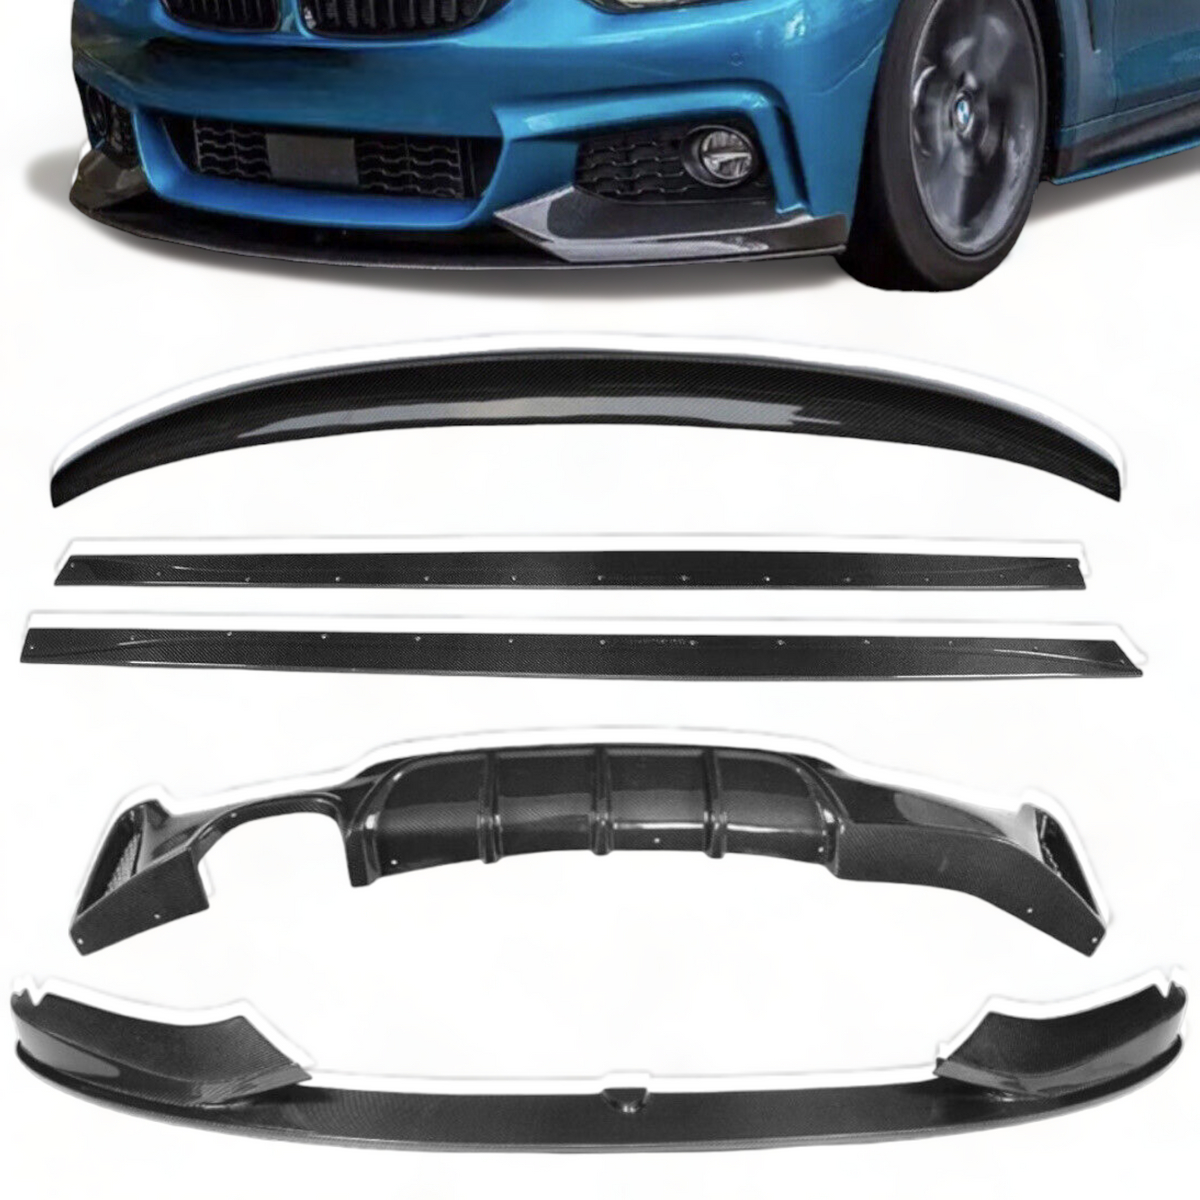 Full Body Kit - Fits BMW F33 4 Series - Quad Exit - Carbon Look